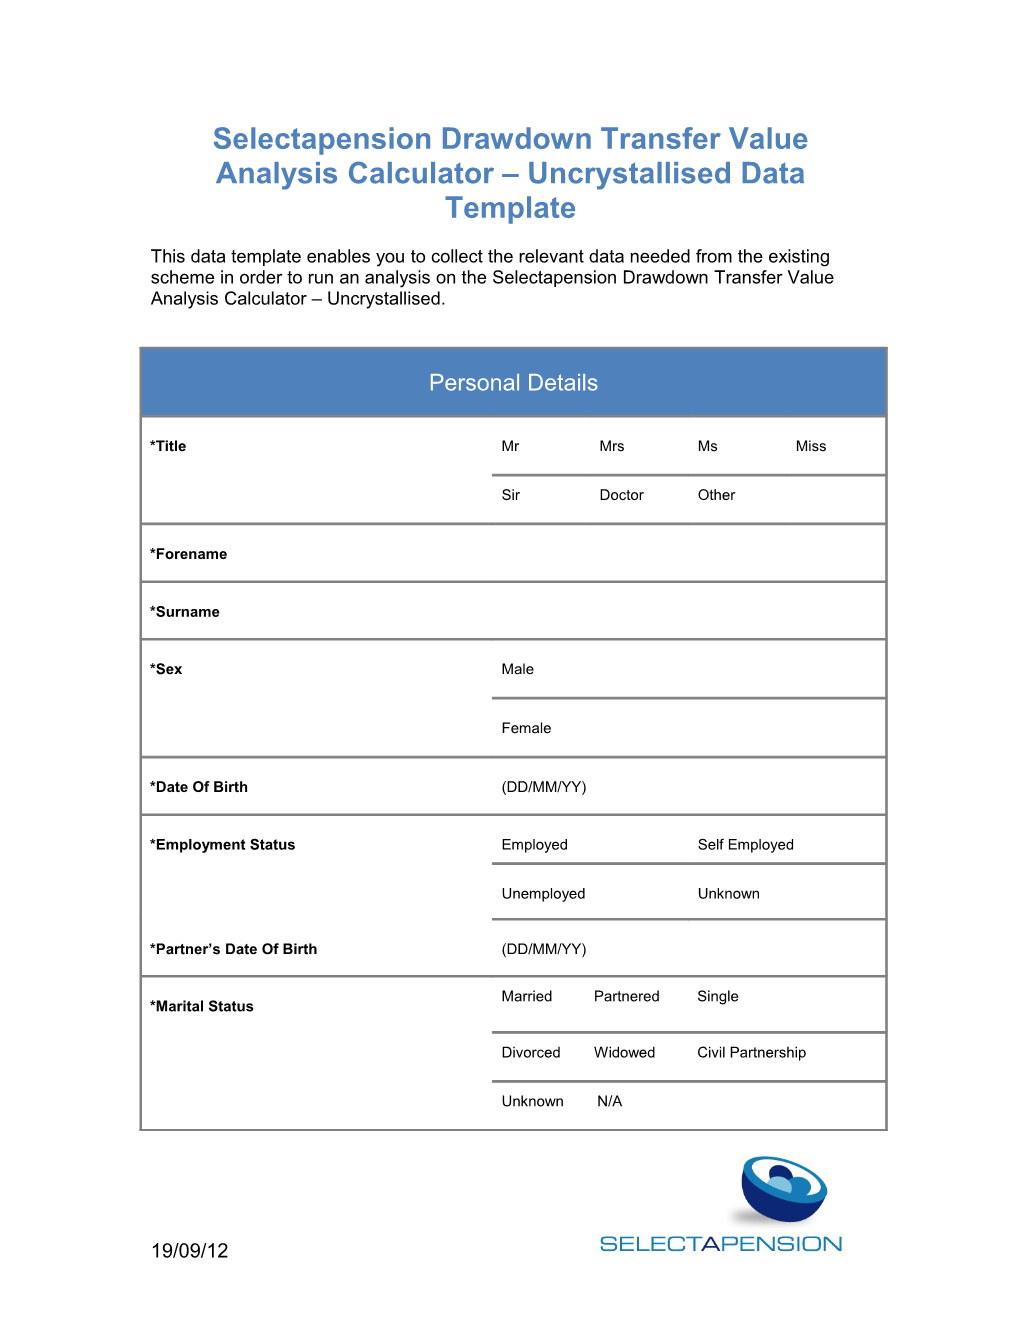 Selectapension Drawdown Transfer Value Analysis Calculator Uncrystallised Data Template